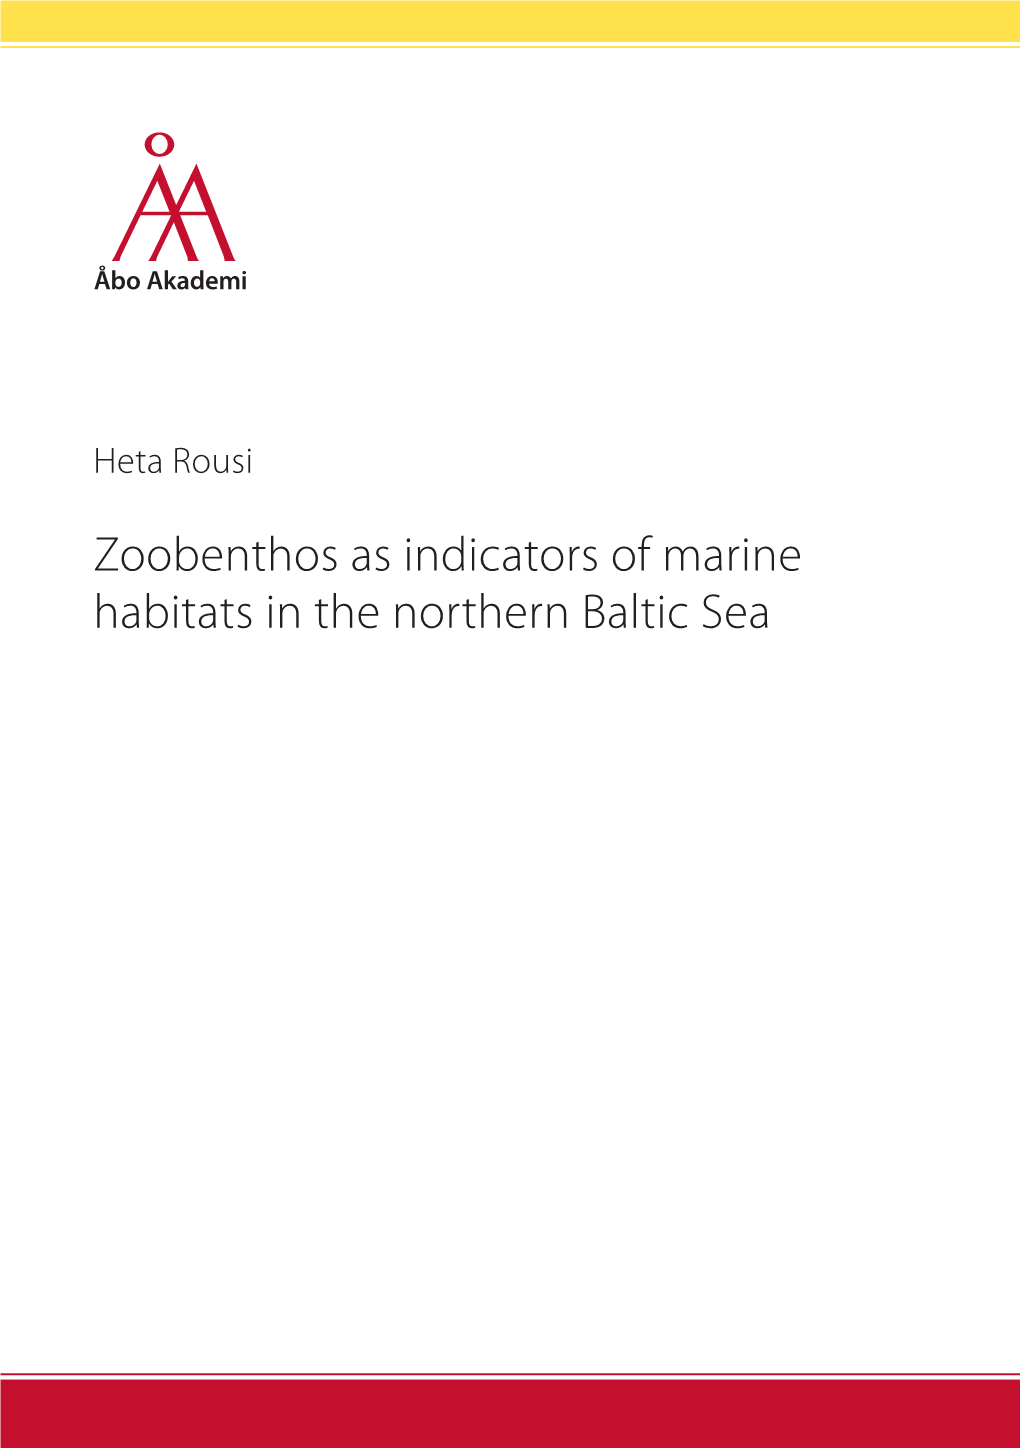 HETA ROUSI: Zoobenthos As Indicators of Marine Habitats in the Northern Baltic